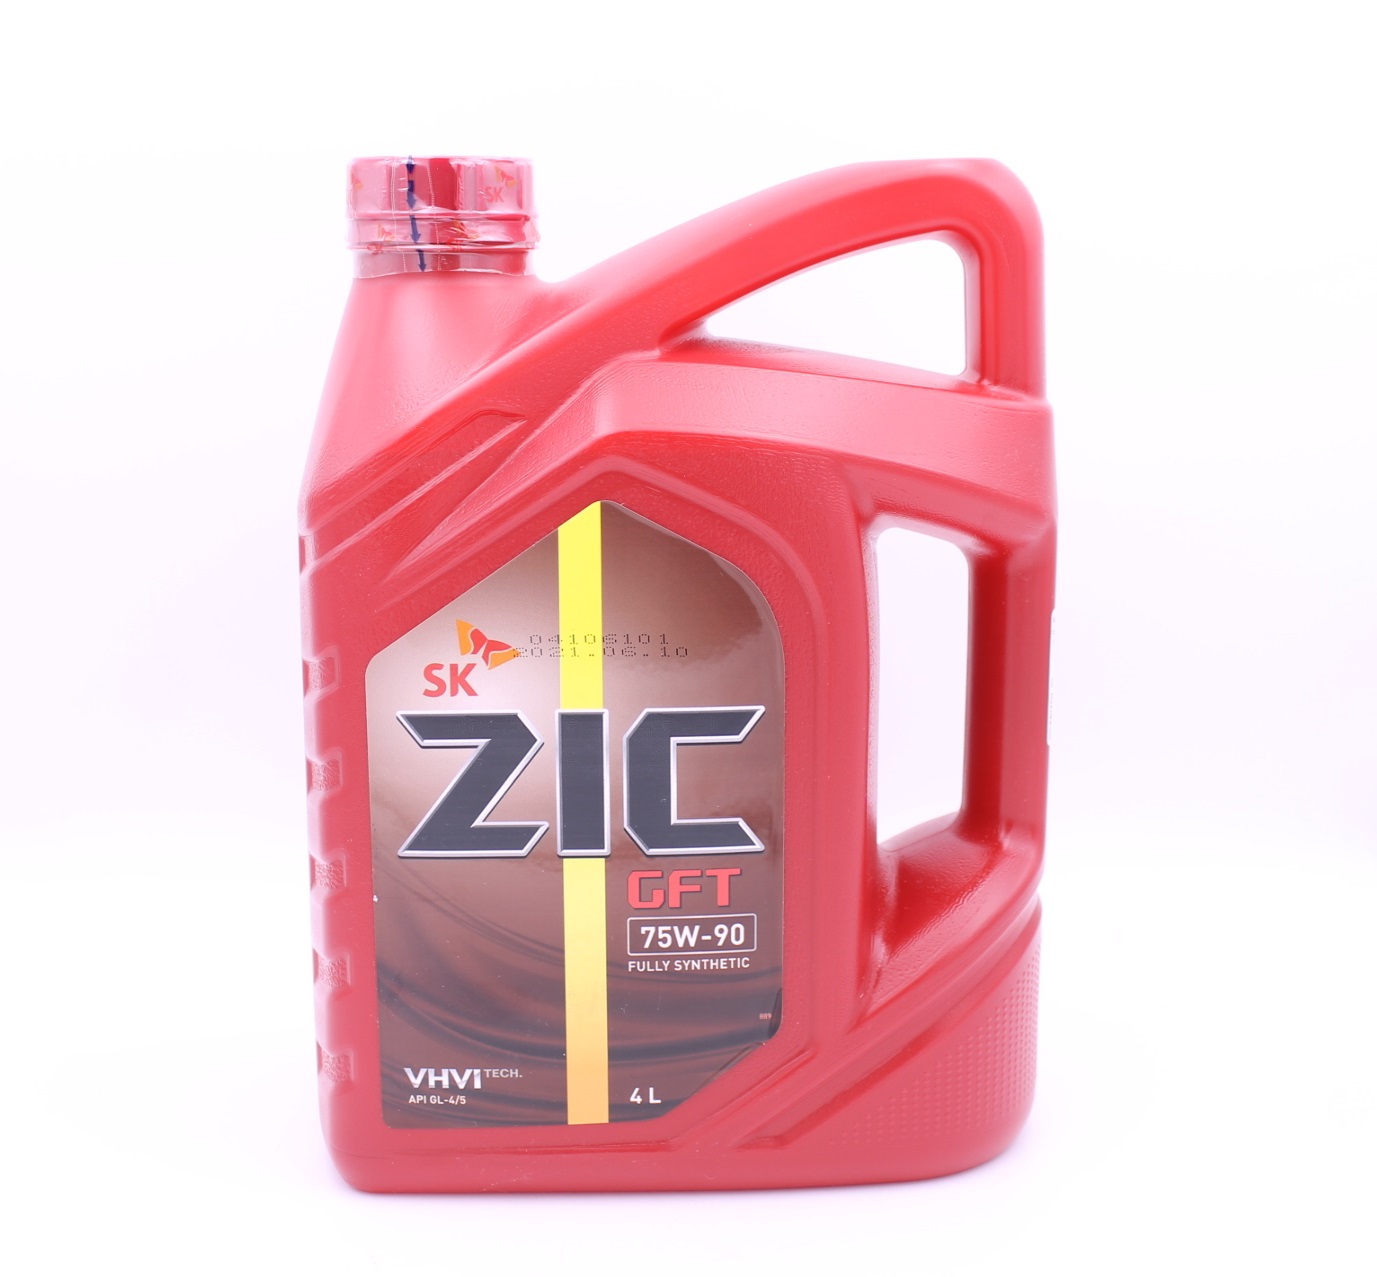 Трансмиссионные масла zic синтетика. ZIC GFT 75w-90. Масло 75w90 синтетика ZIC. ZIC 162629. ZIC трансмиссионное масло 75w90 синтетика.